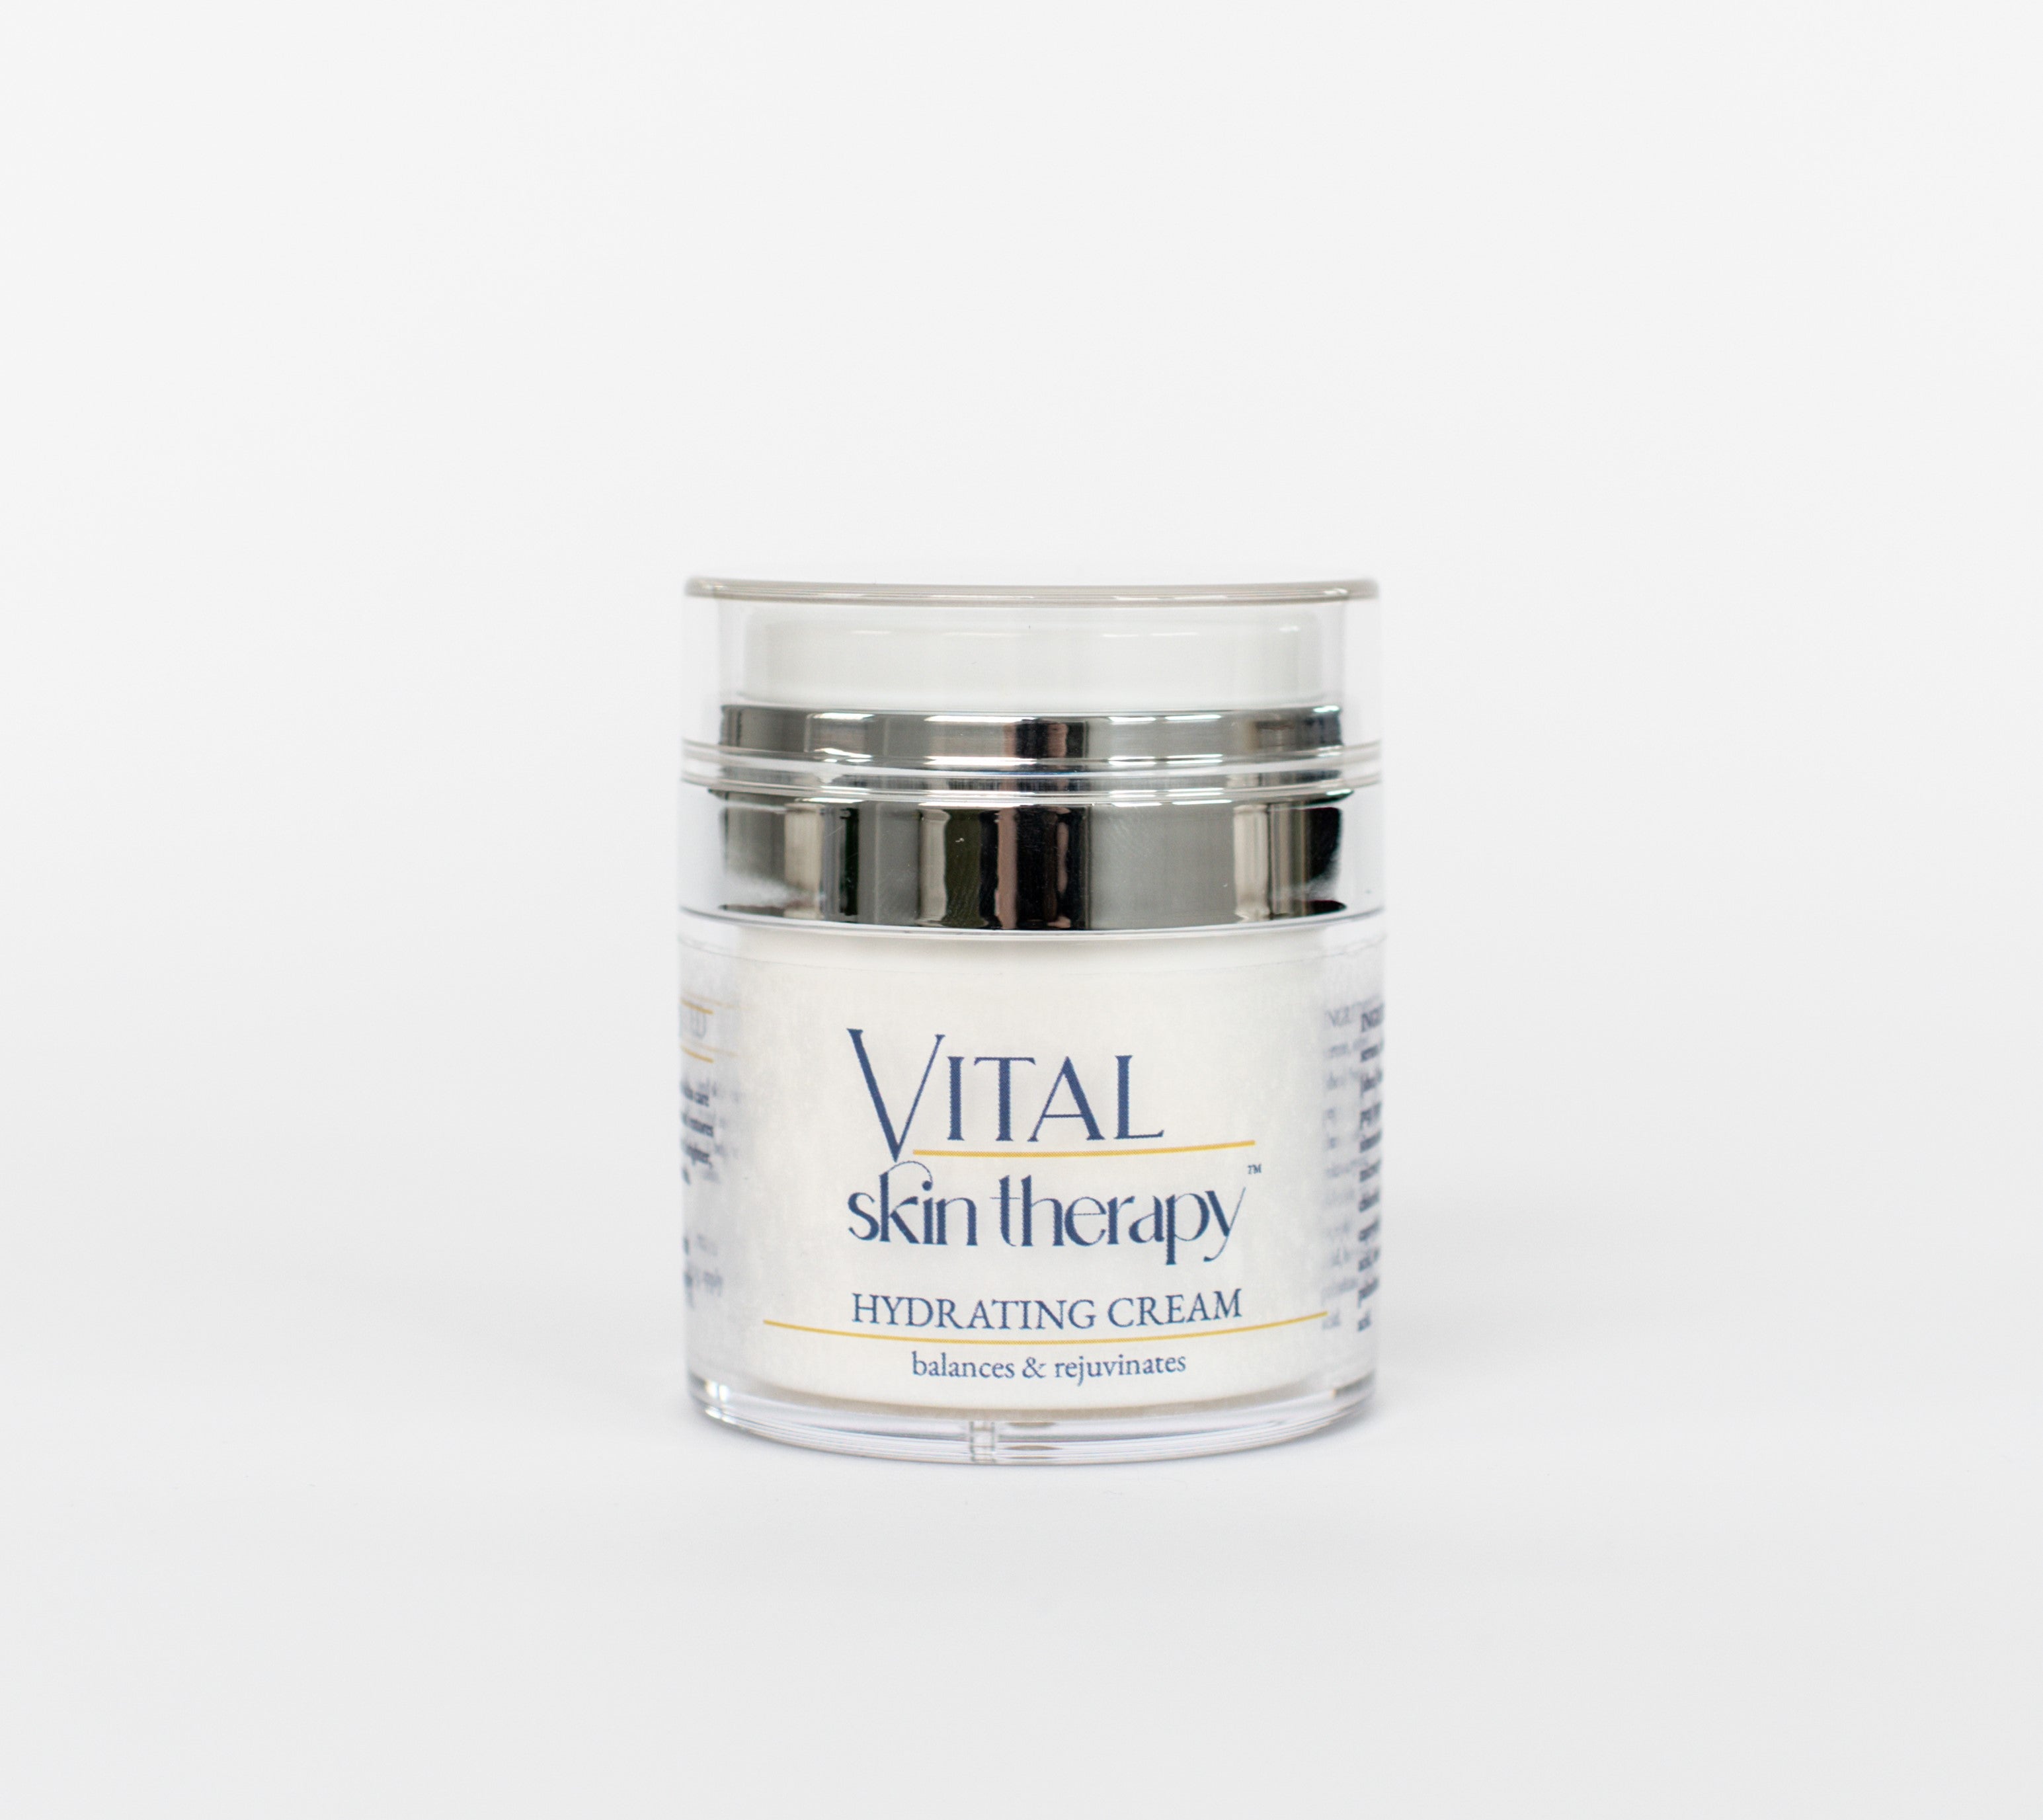 Vital Skin Therapy Hydrating Cream